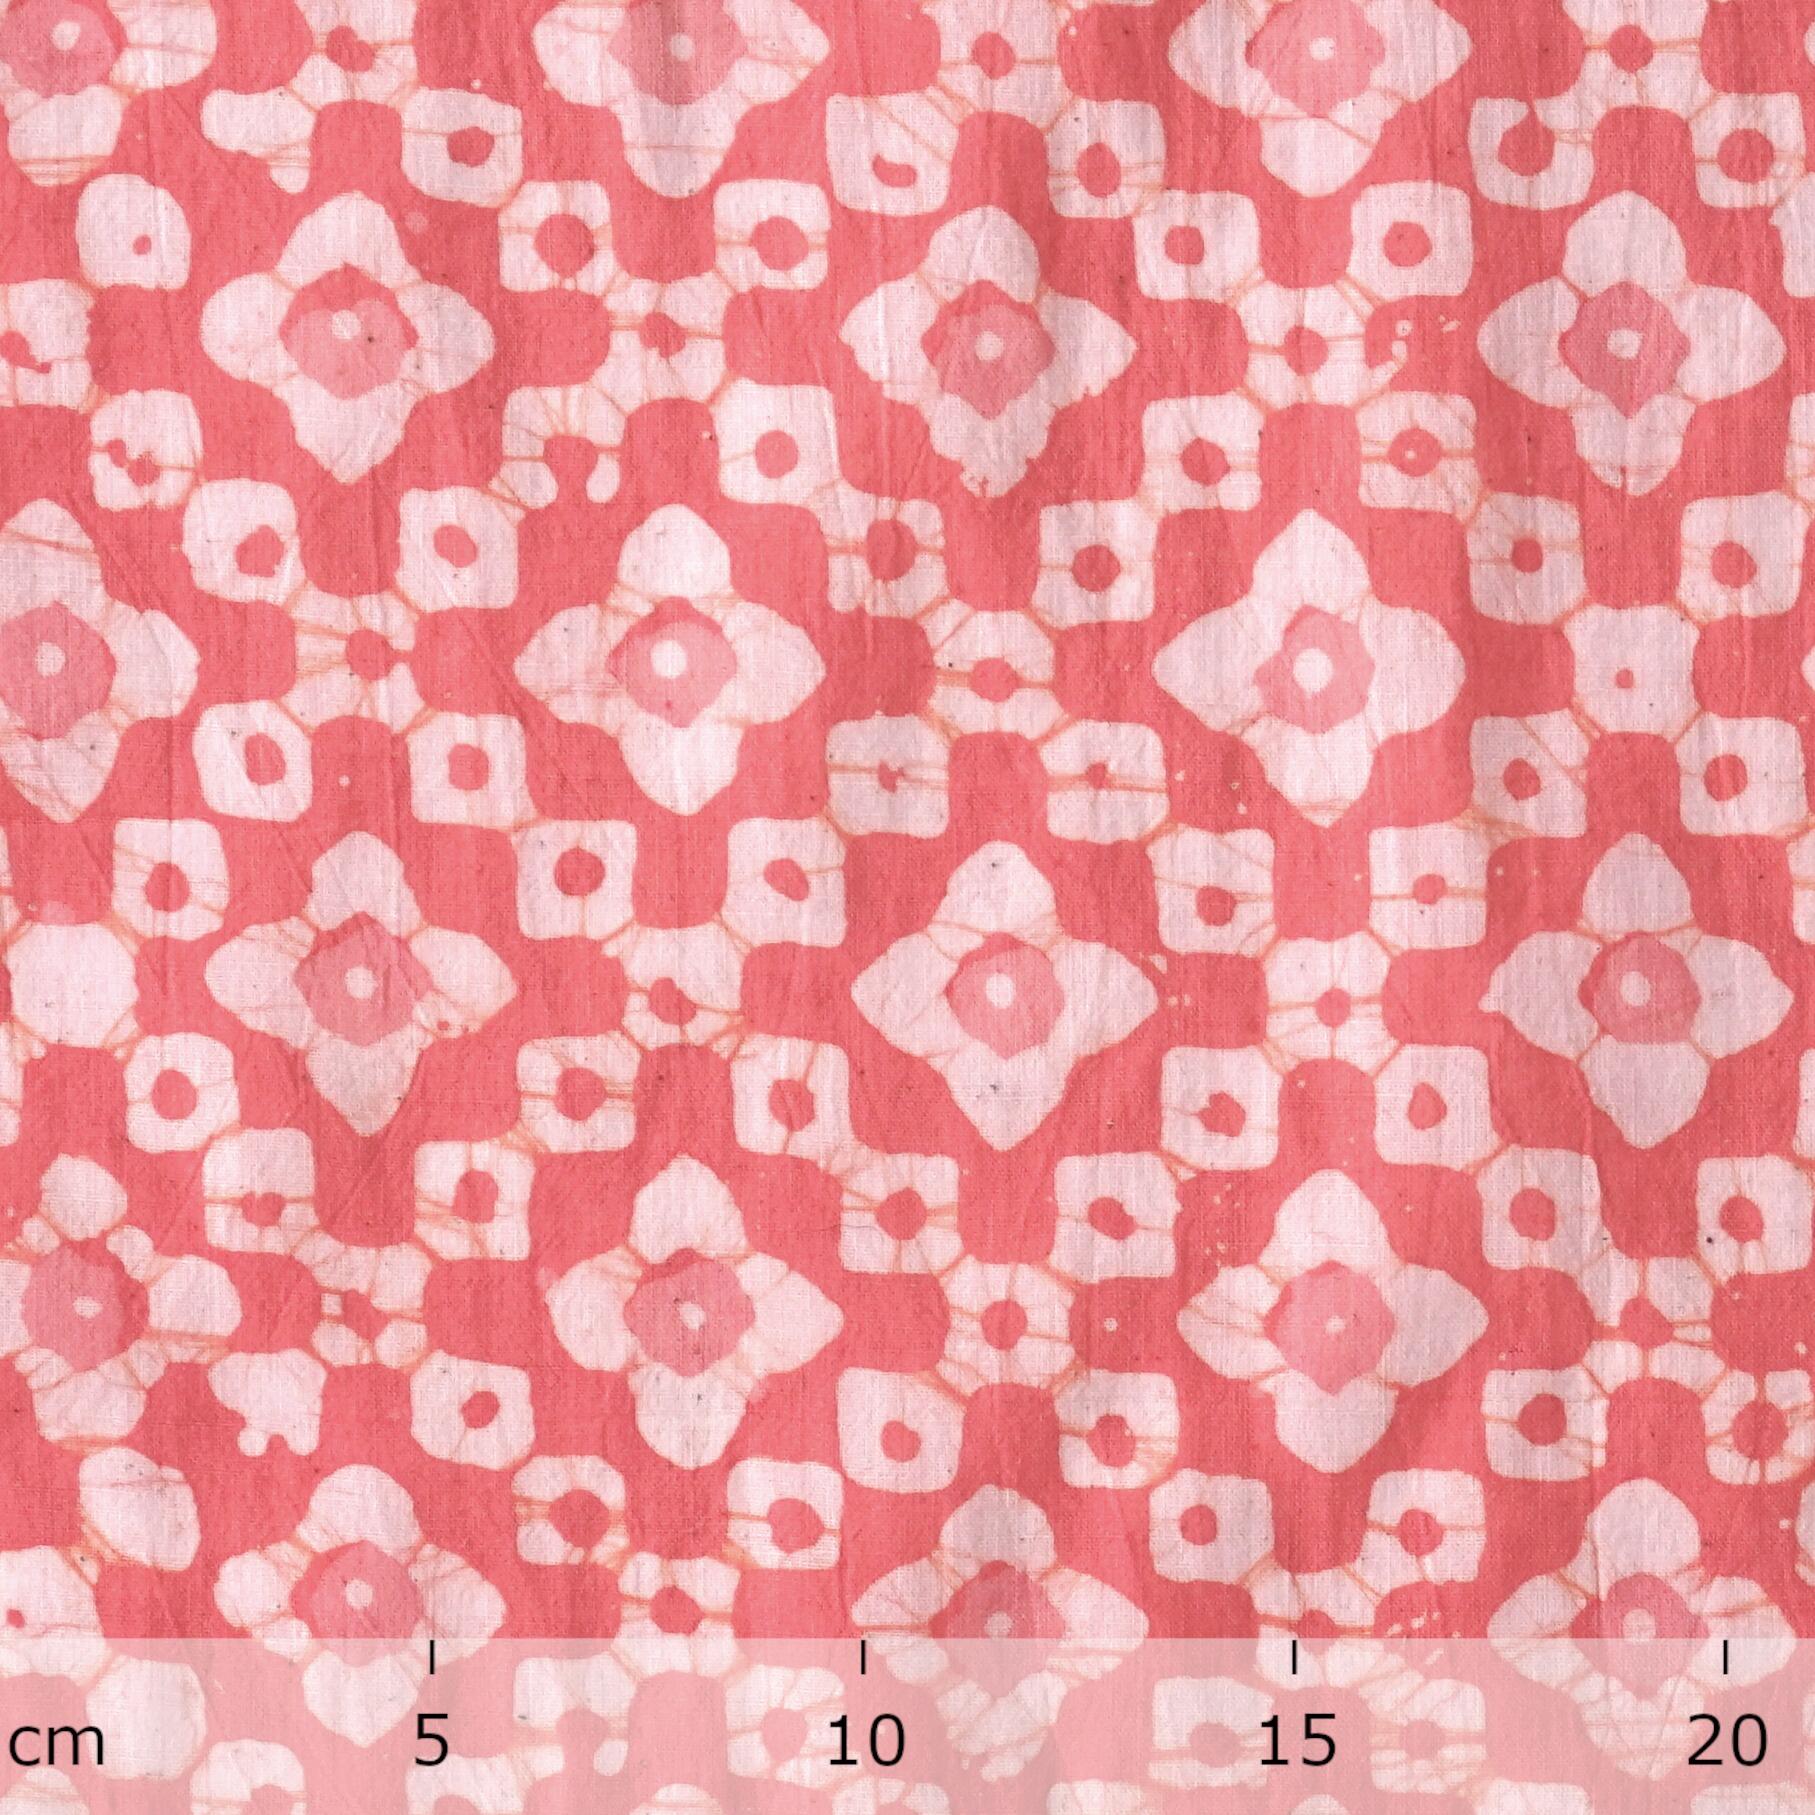 100% Block-Printed Batik Cotton Fabric From India - Alhambra Tiles Motif - Salmon Dye - Ruler